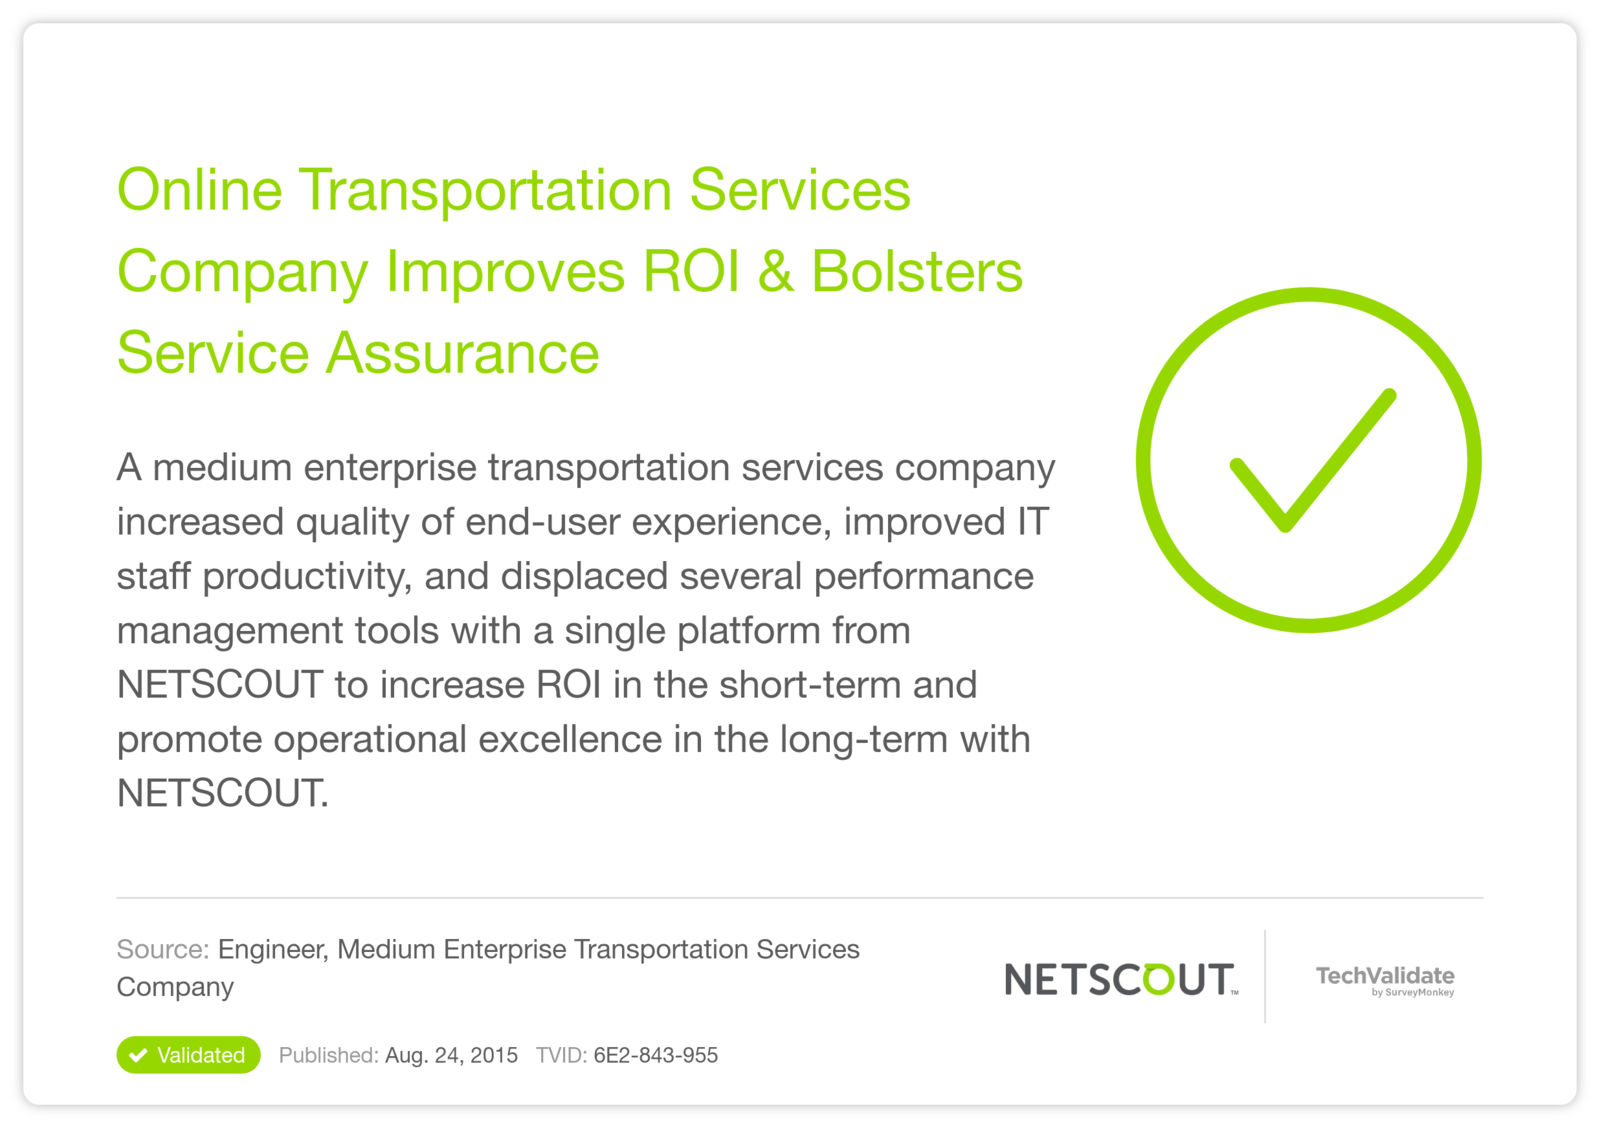 Online Transportation Services Company Improves ROI & Bolsters Service Assurance